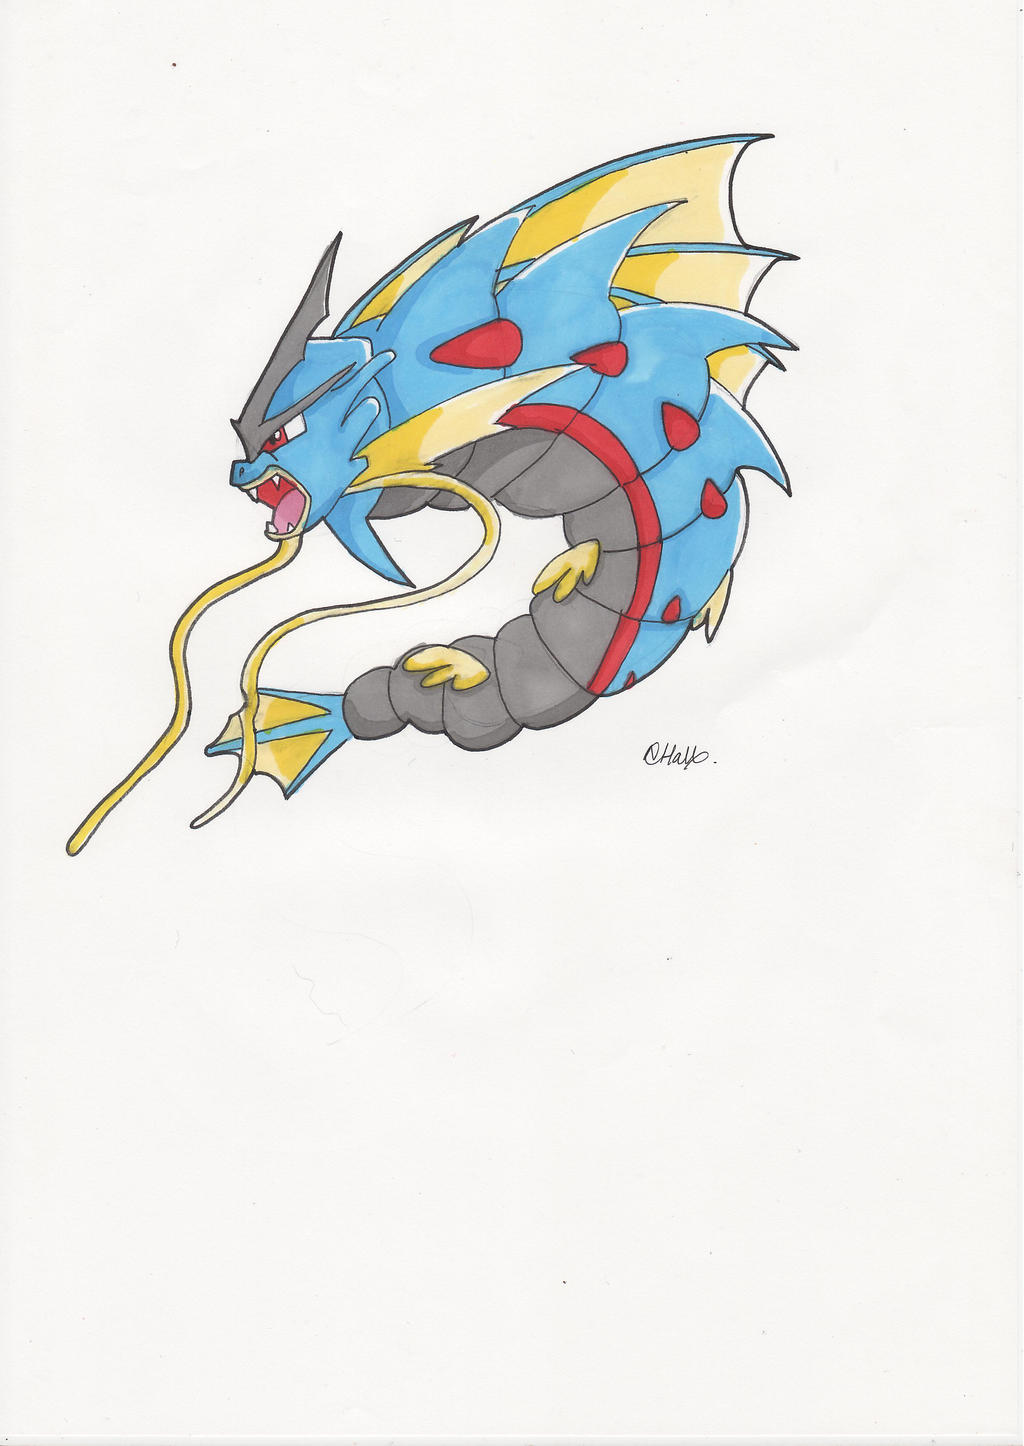 Mega Gyarados Concept Art by Pokemonsketchartist on DeviantArt